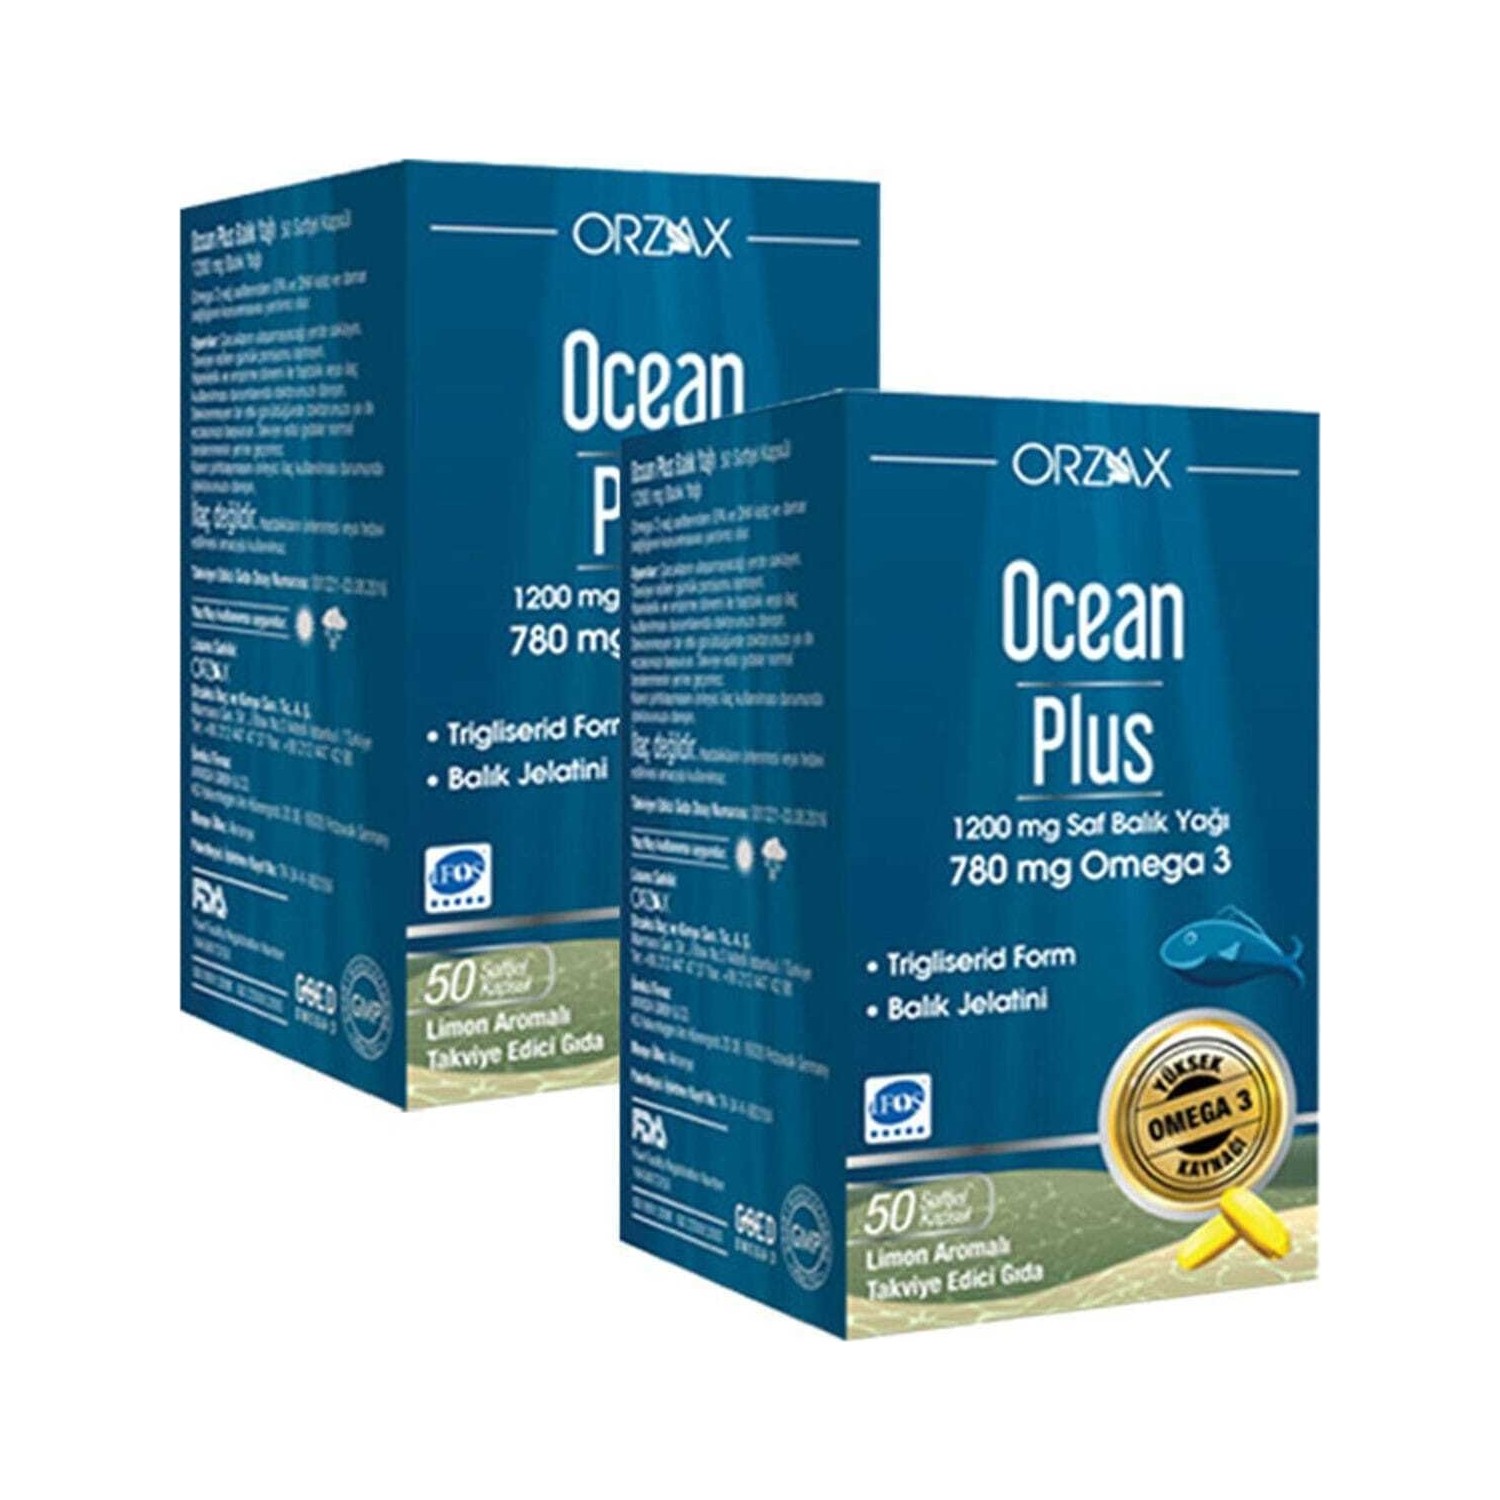 Омега-3 Plus Orzax 1200 мг, 2 упаковки по 50 капсул омега 3 orzax ocean plus 1200 мг 4 упаковки по 50 капсул